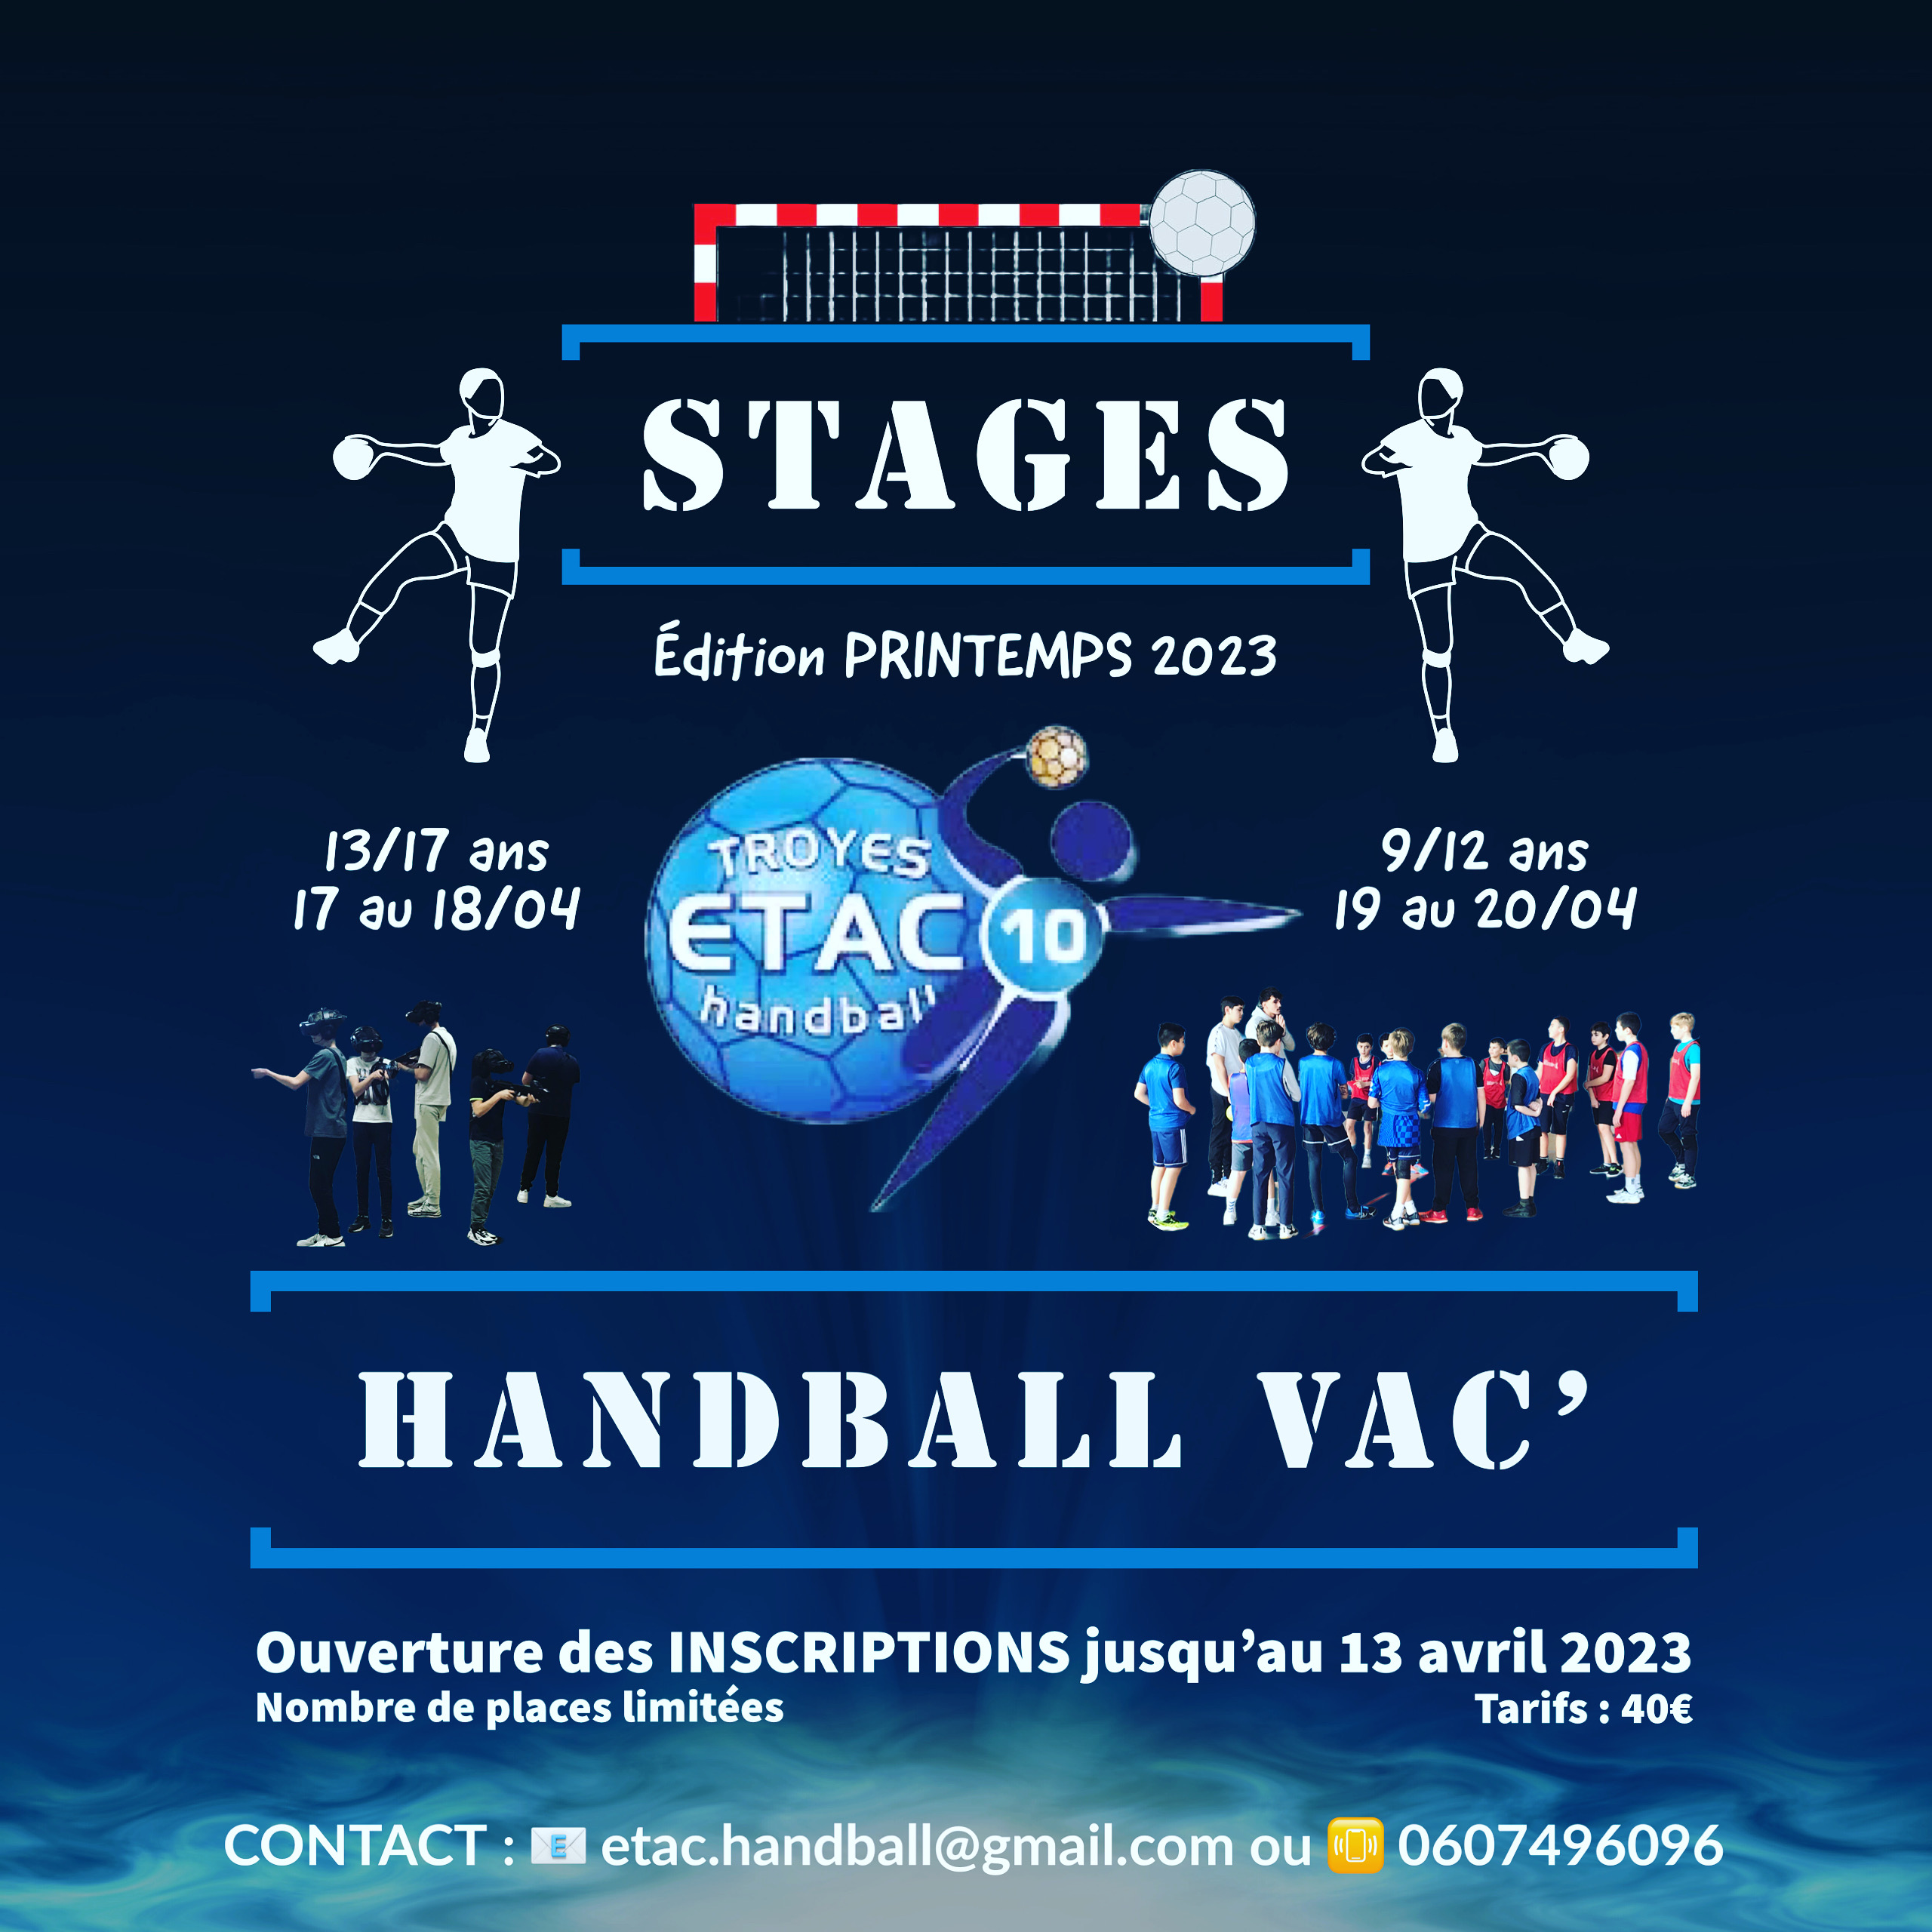 Edition Printemps des Stages Handball Vac'